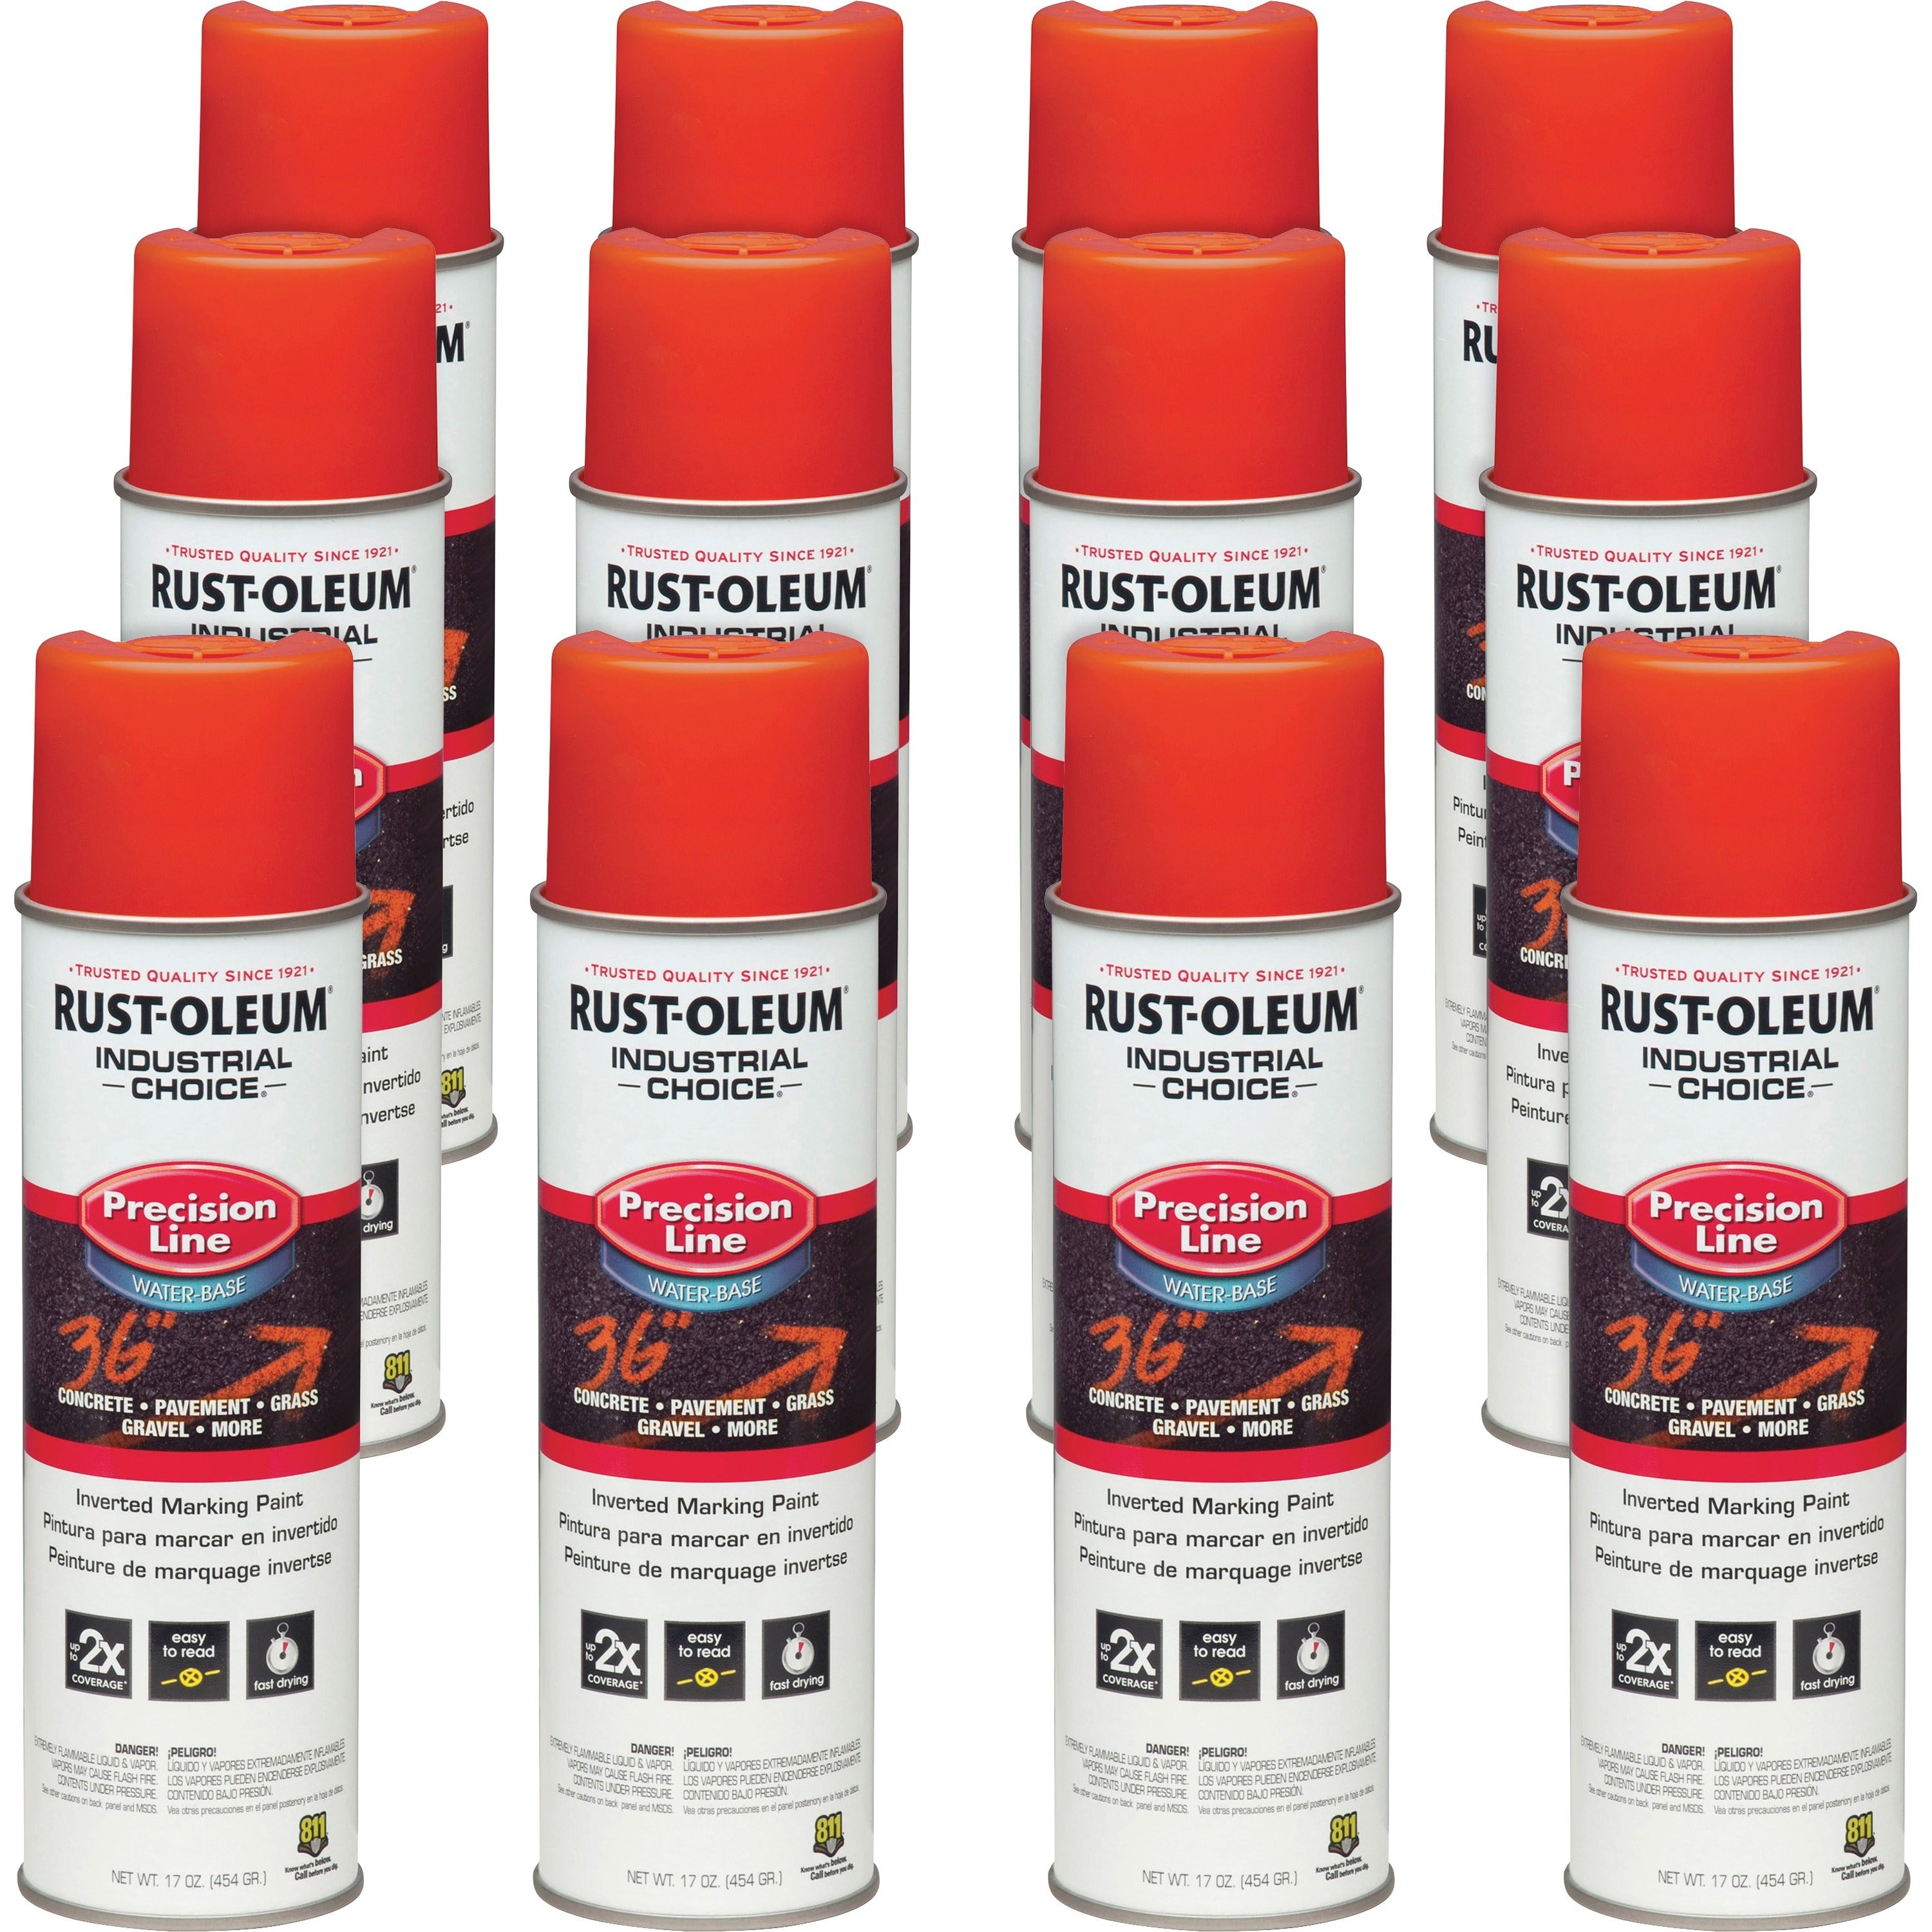 rust-oleum-industrial-choice-precision-line-marking-paint-17-fl-oz-12-carton-alert-orange_rst203035ct - 1